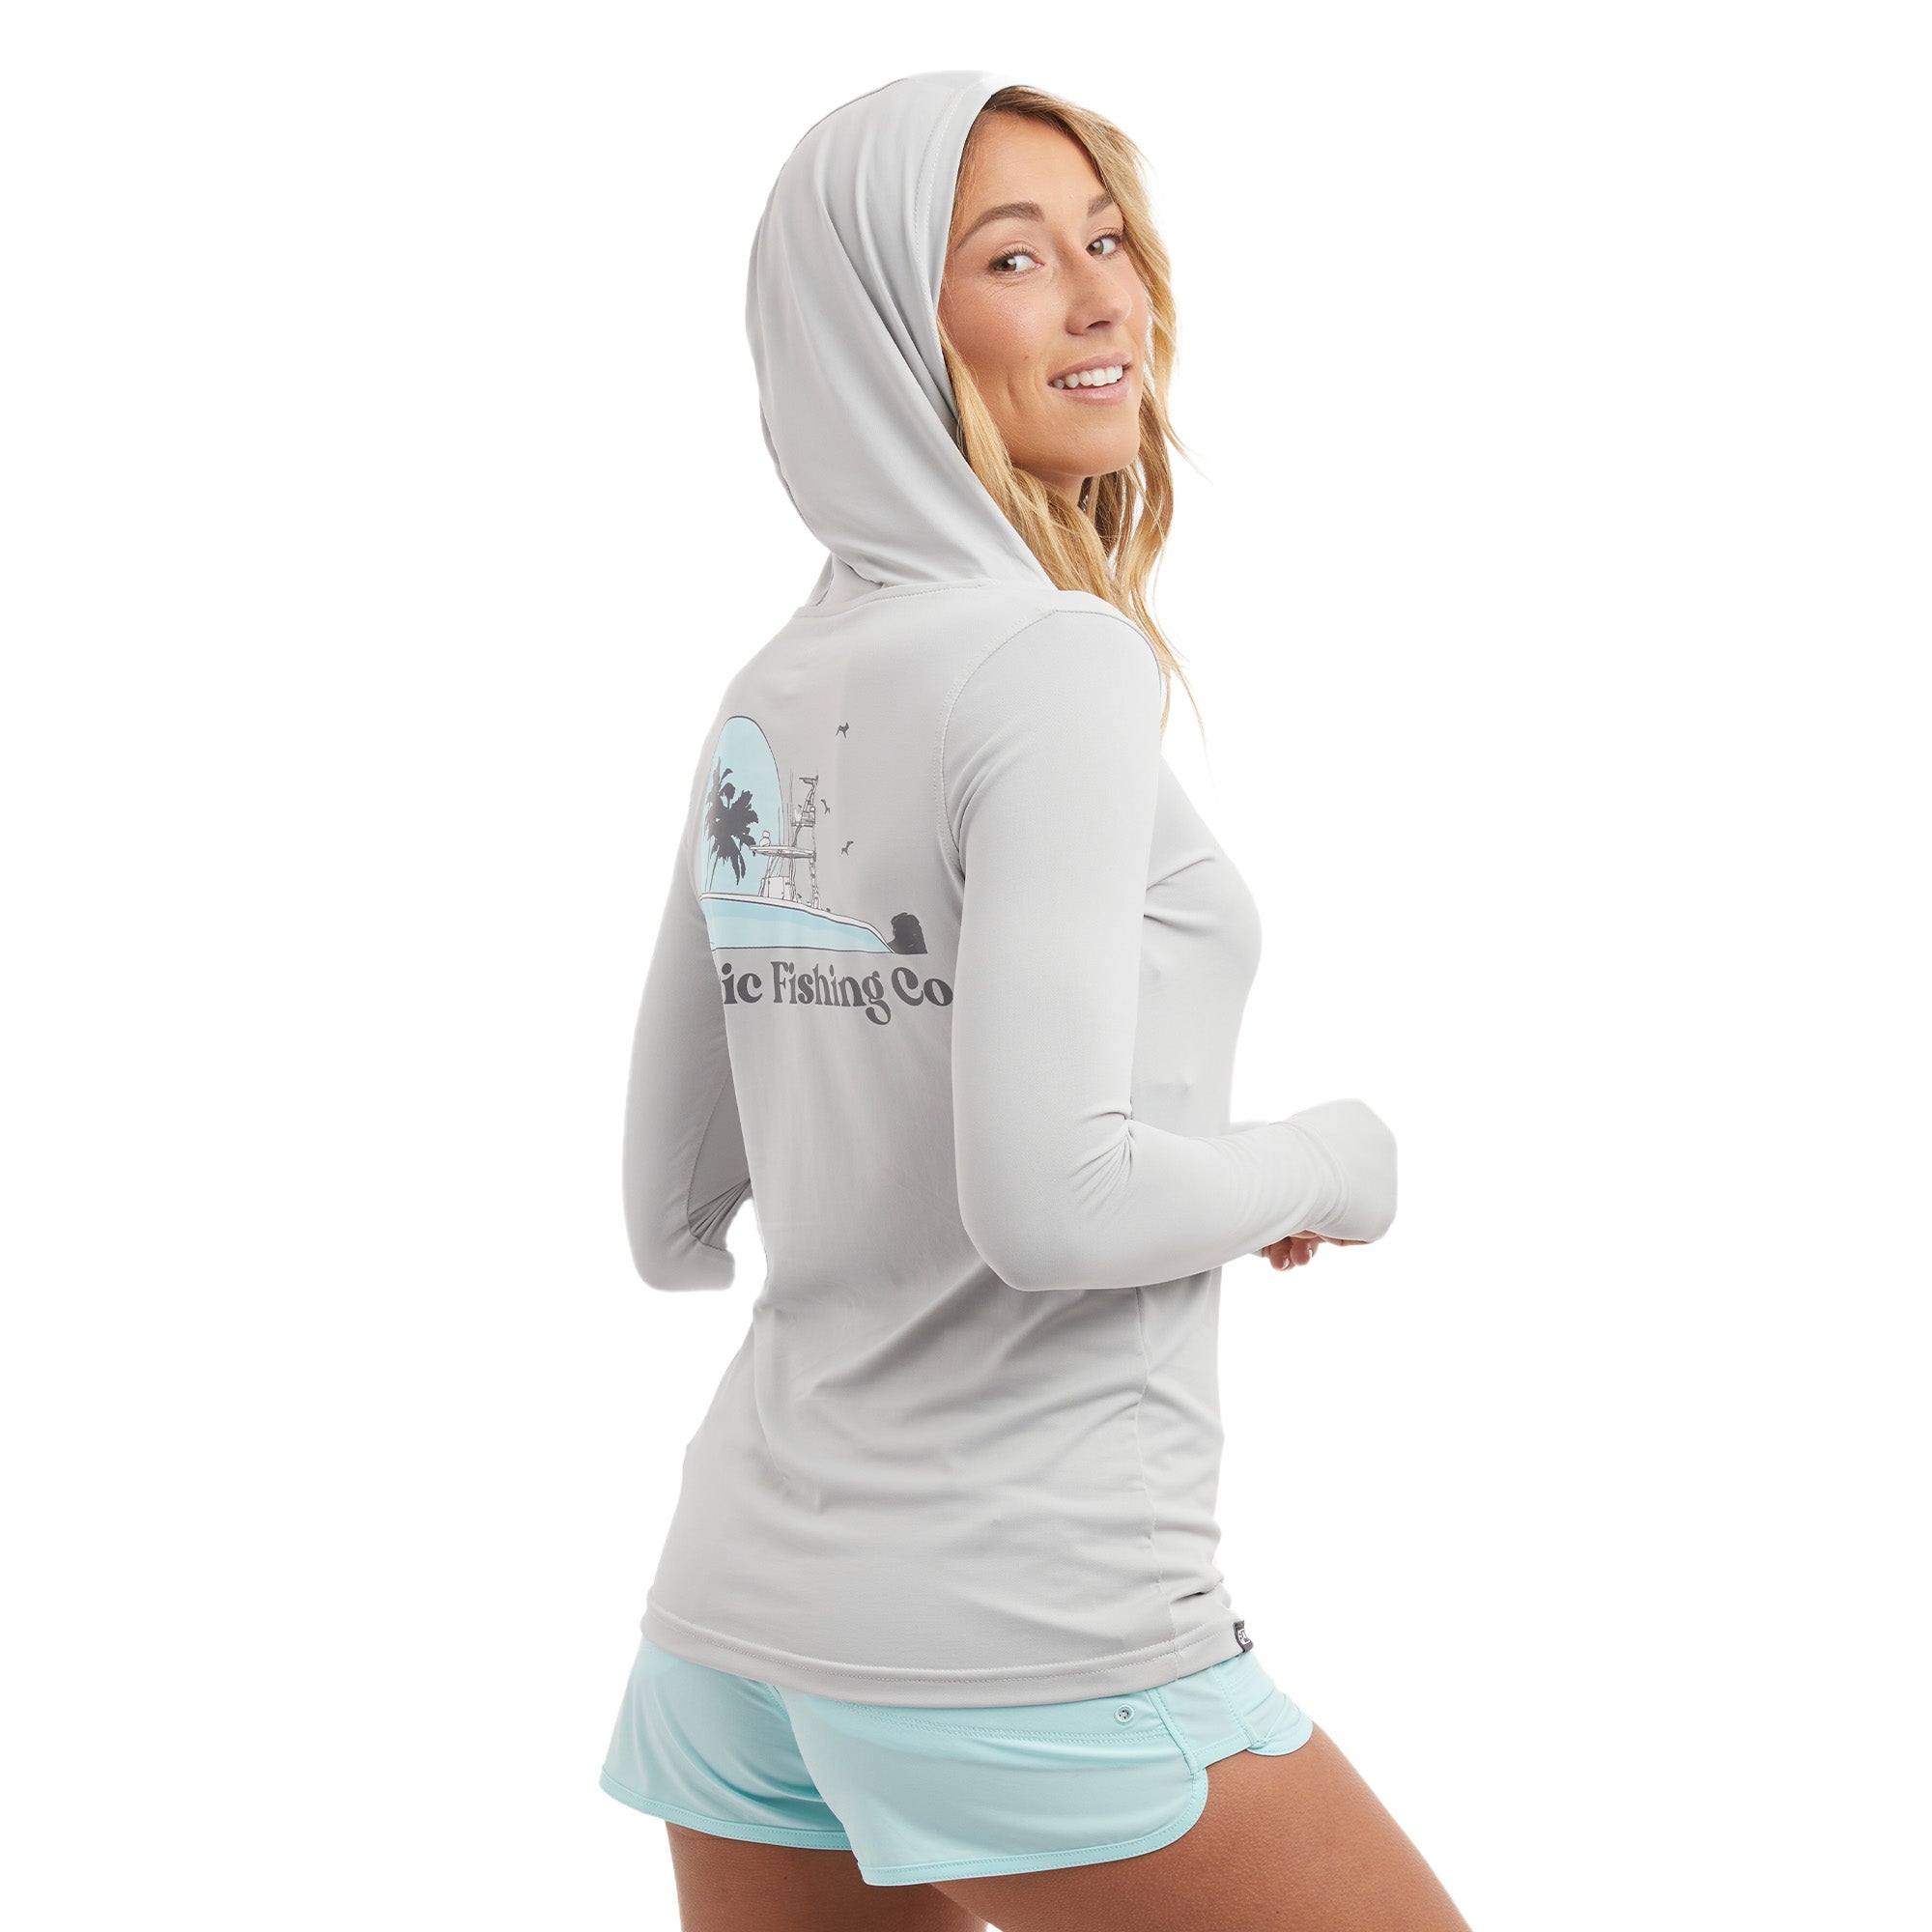 Pelagic Aquatek Evening Fade Women's Hooded Fishing Shirt UPF 50+ - Light Grey XS / Light Grey (LGY)